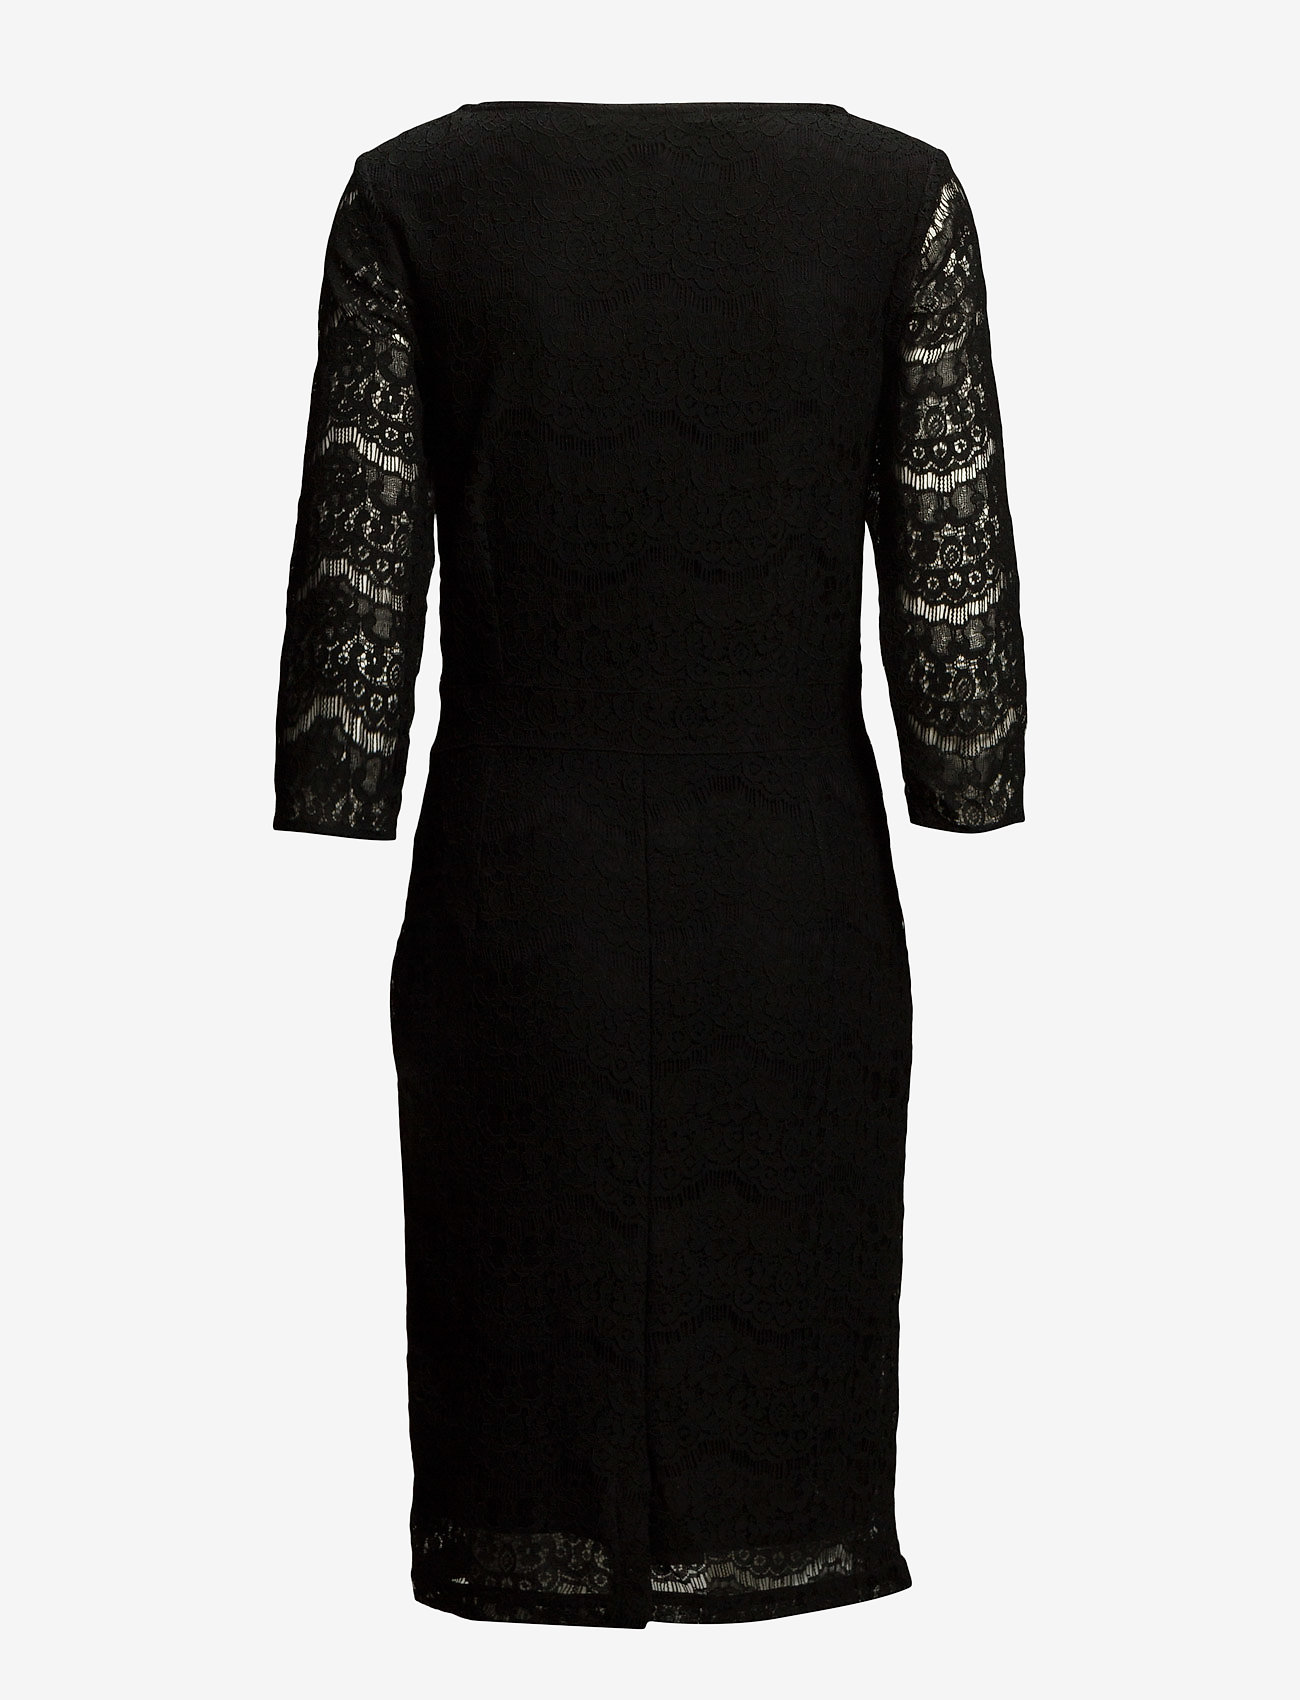 Minus - Anastacia dress - black - 1